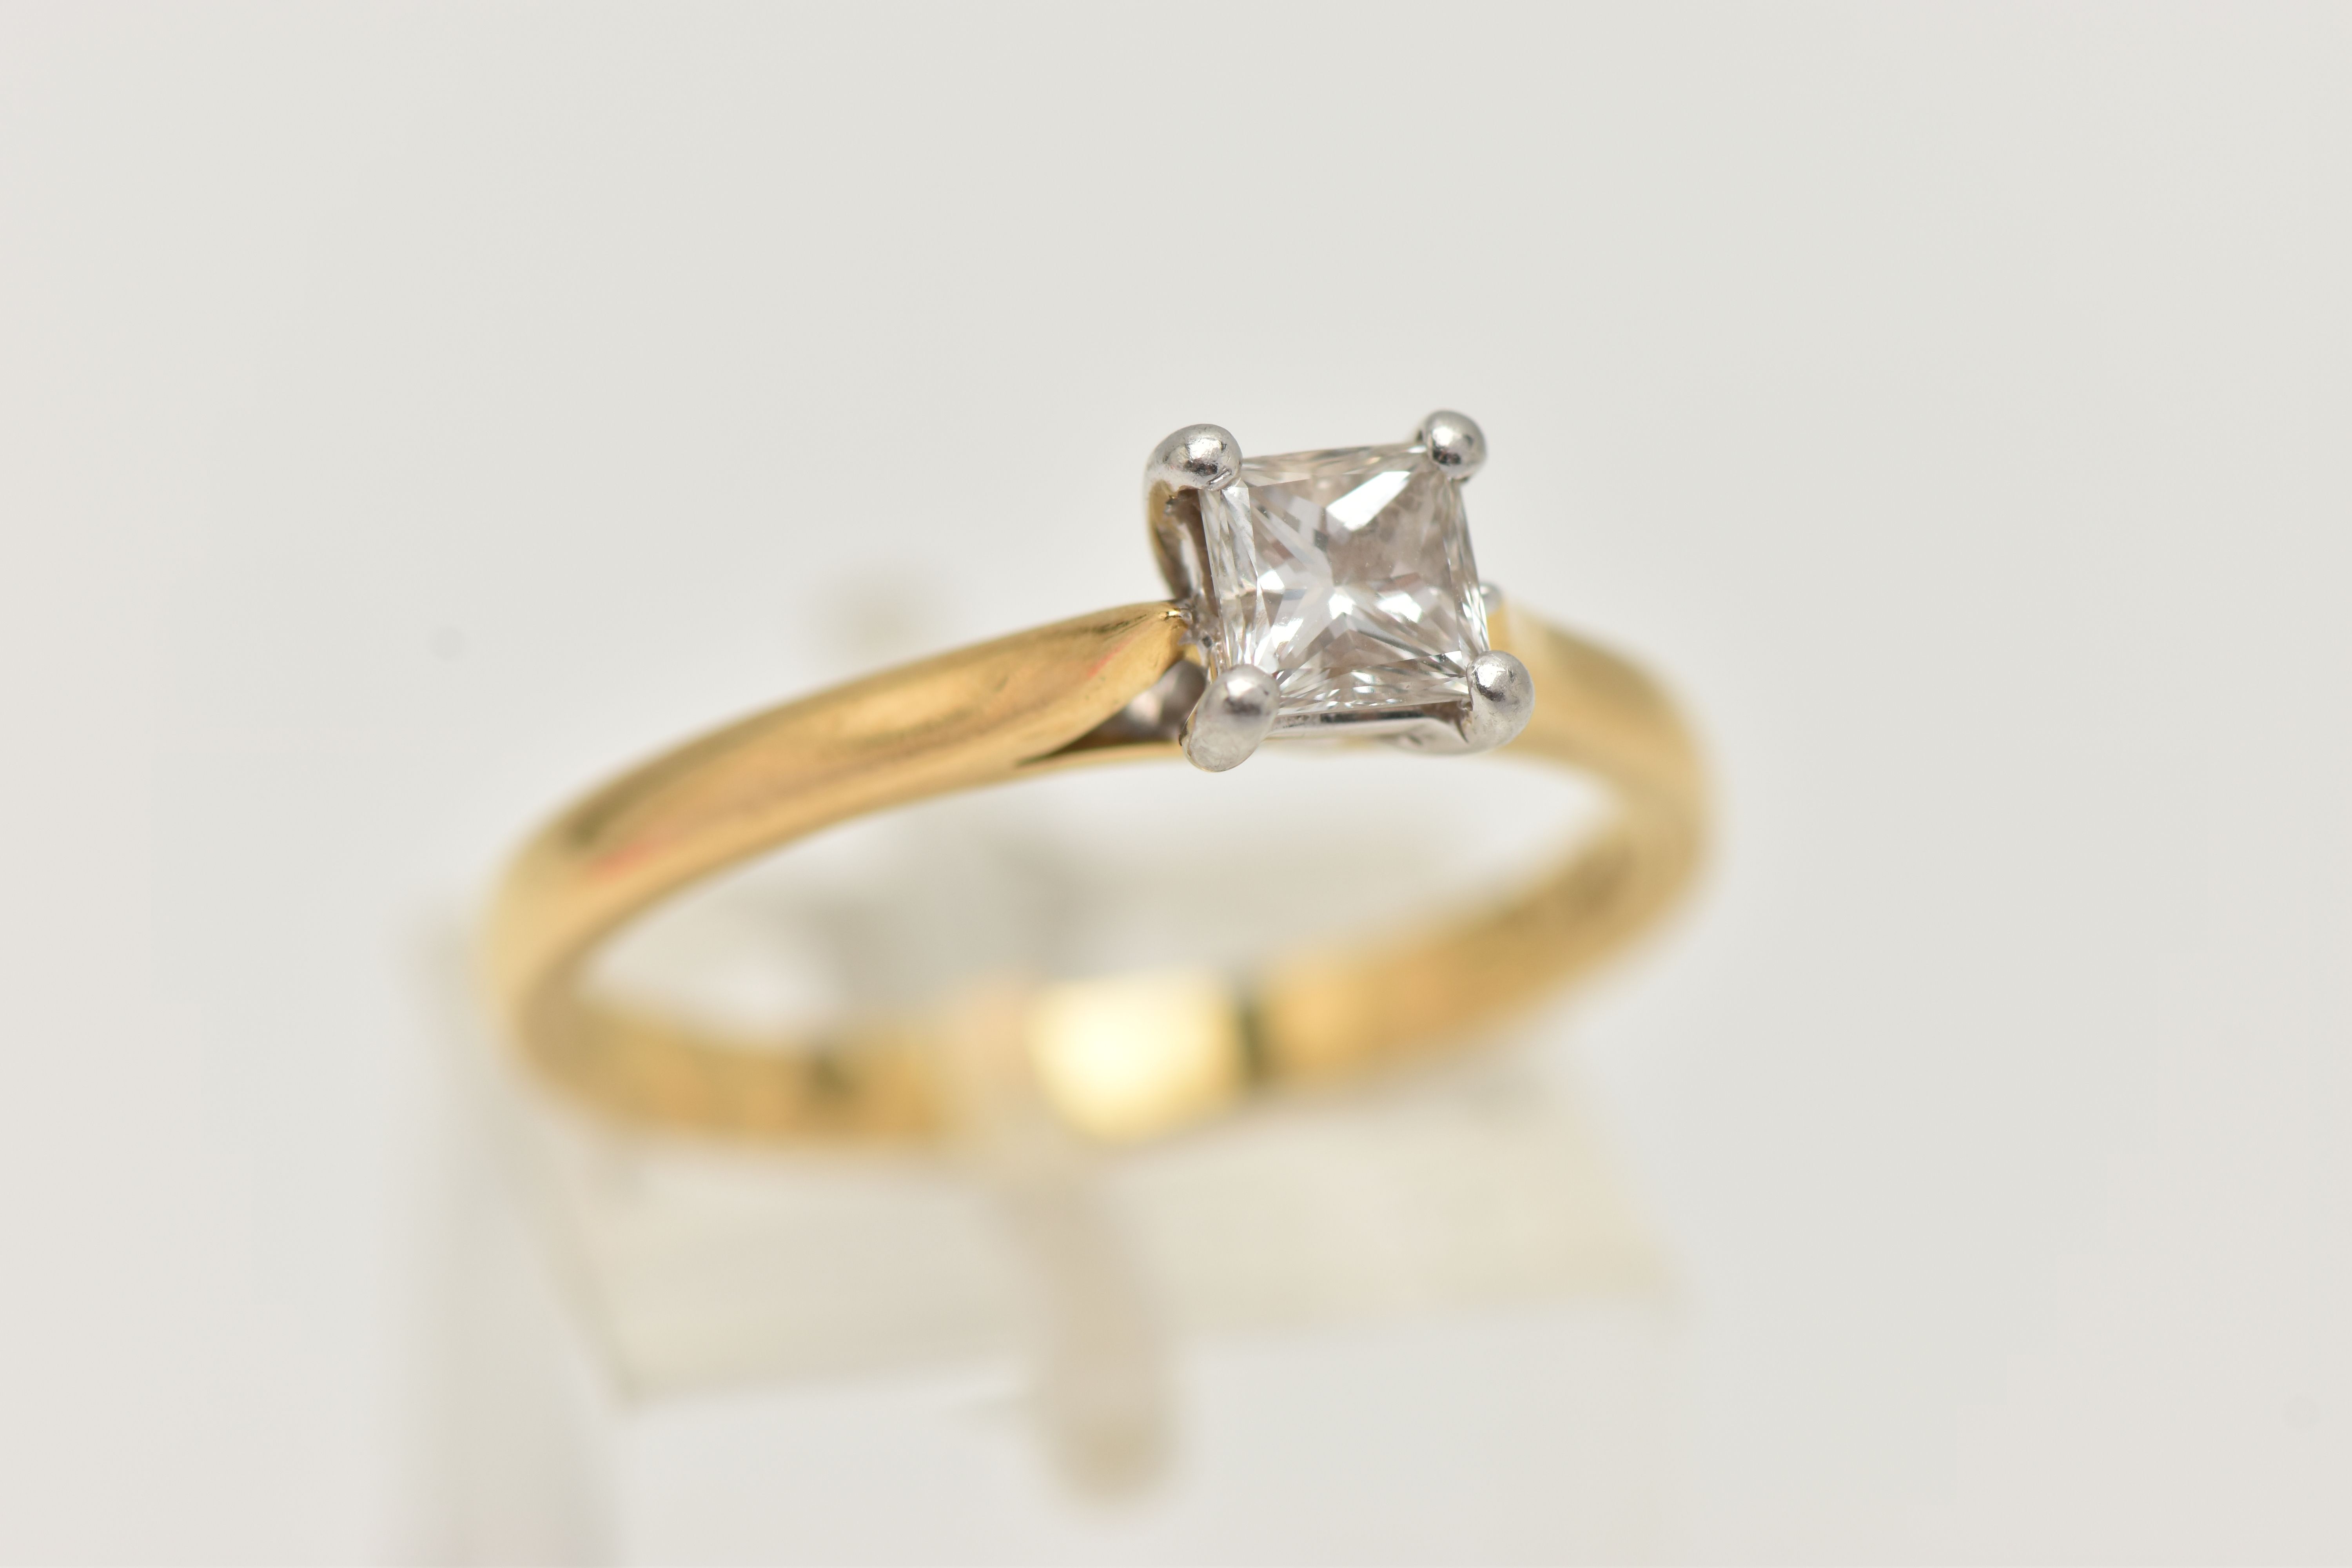 AN 18CT GOLD DIAMOND SINGLE STONE RING, princess cut diamond, with GIA report, laser inscription - Image 4 of 5